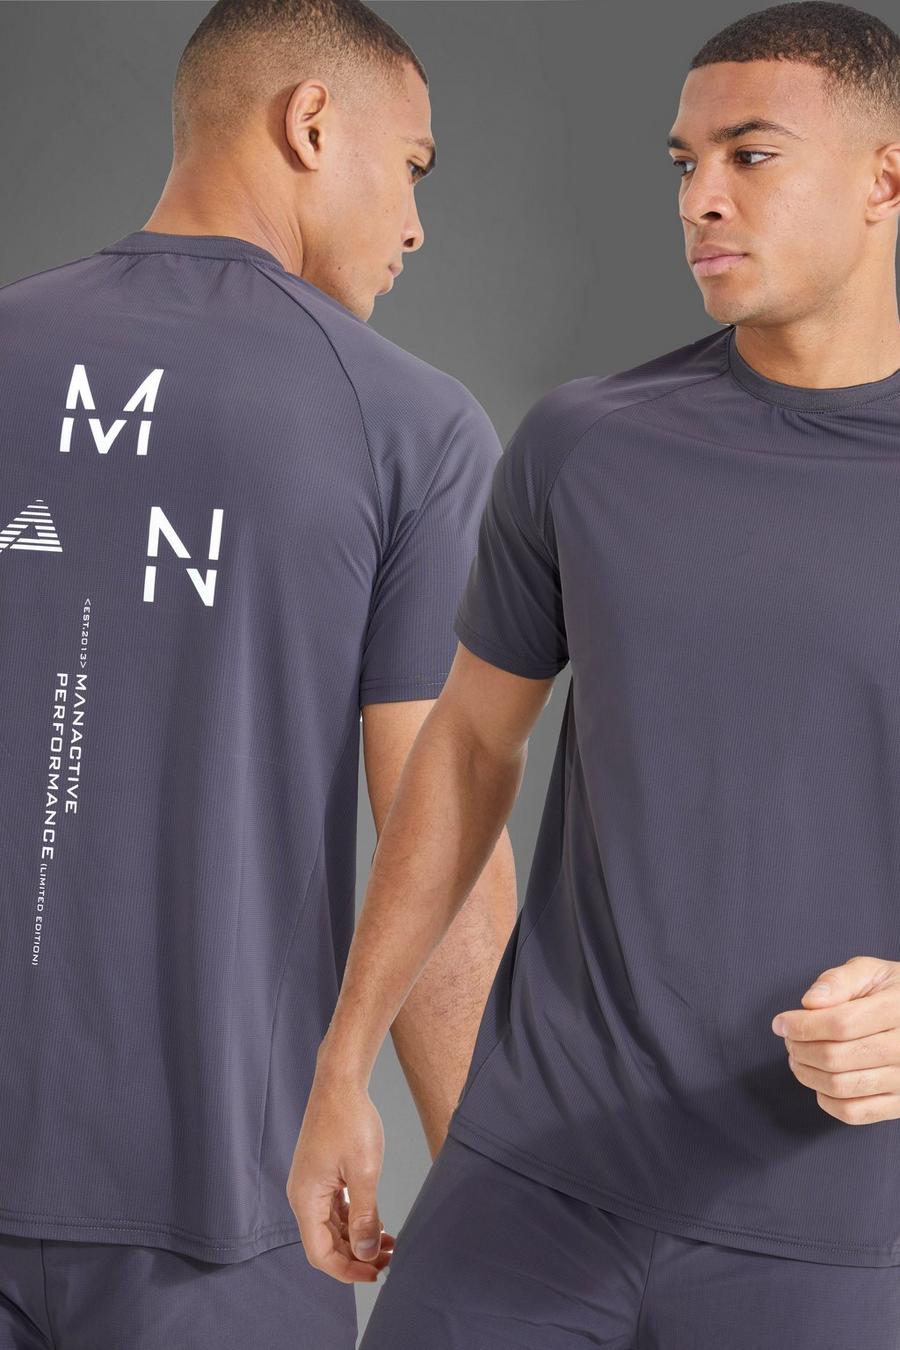 T-shirt Man Active Gym con stampa riflettente sul retro, Charcoal gris